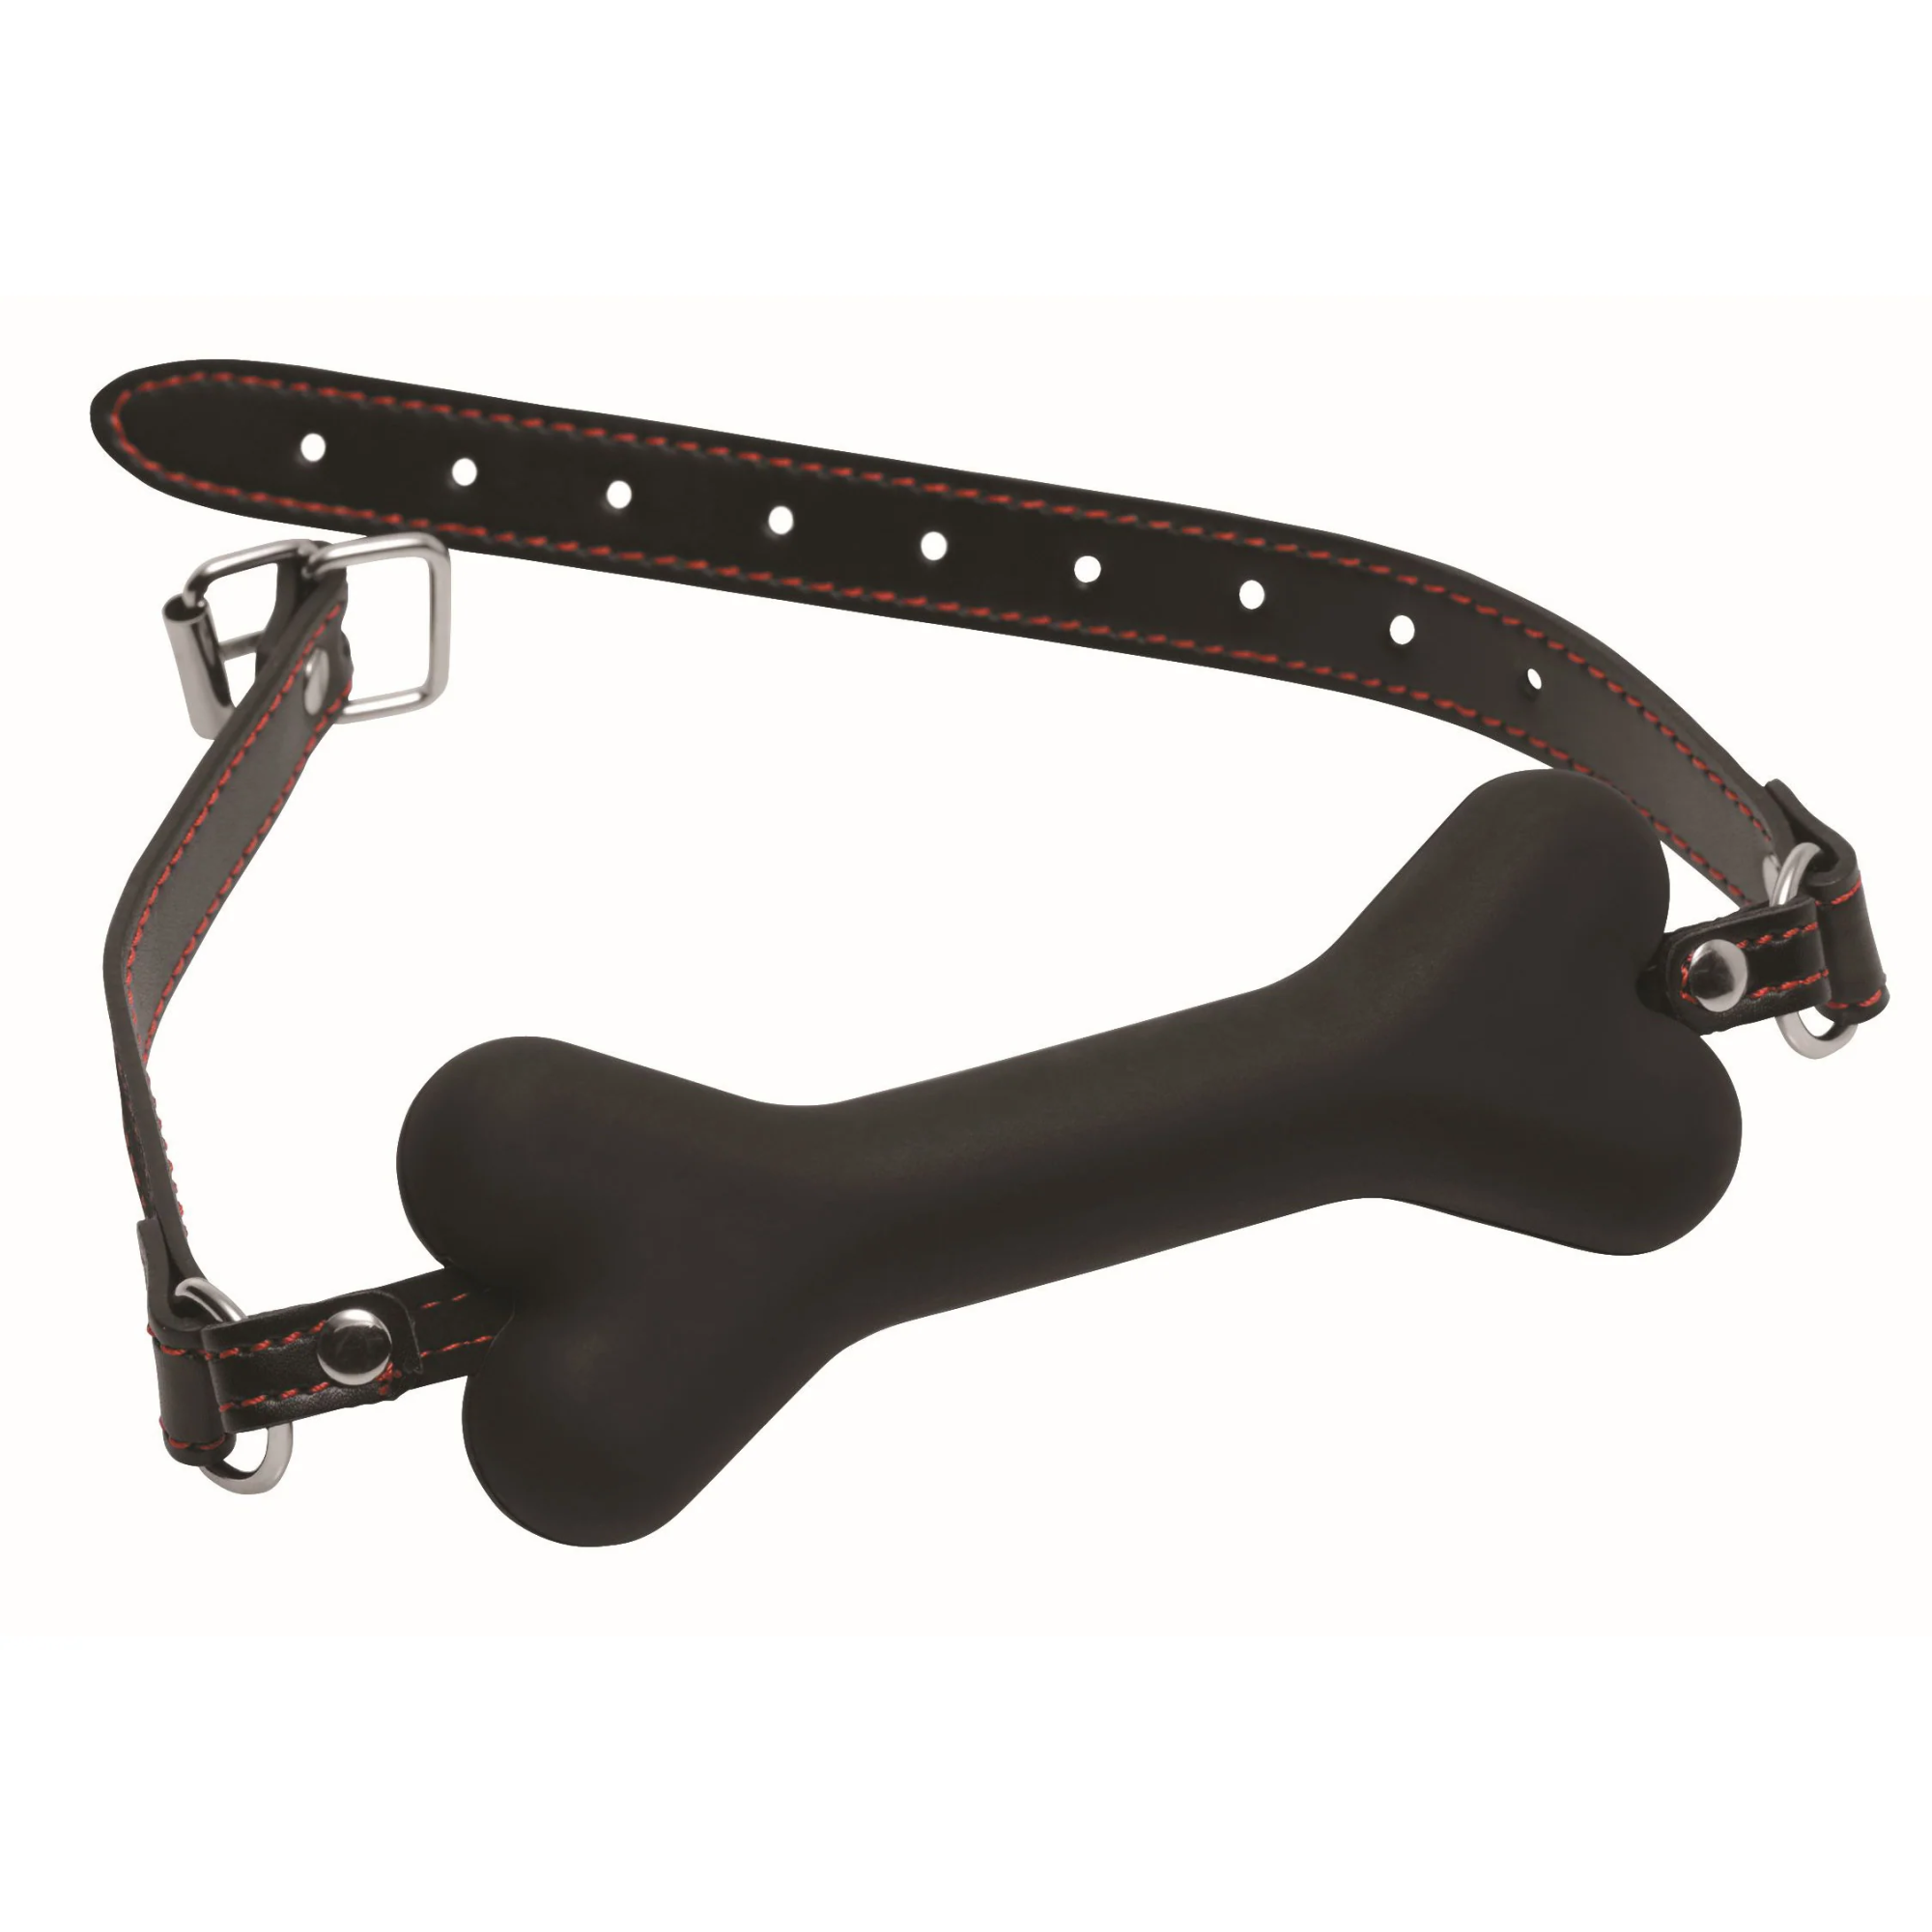 Master Series Hound Adjustable Dog Bone Gag - кляп в форме косточки, 15.2х2.54 см (чёрный)